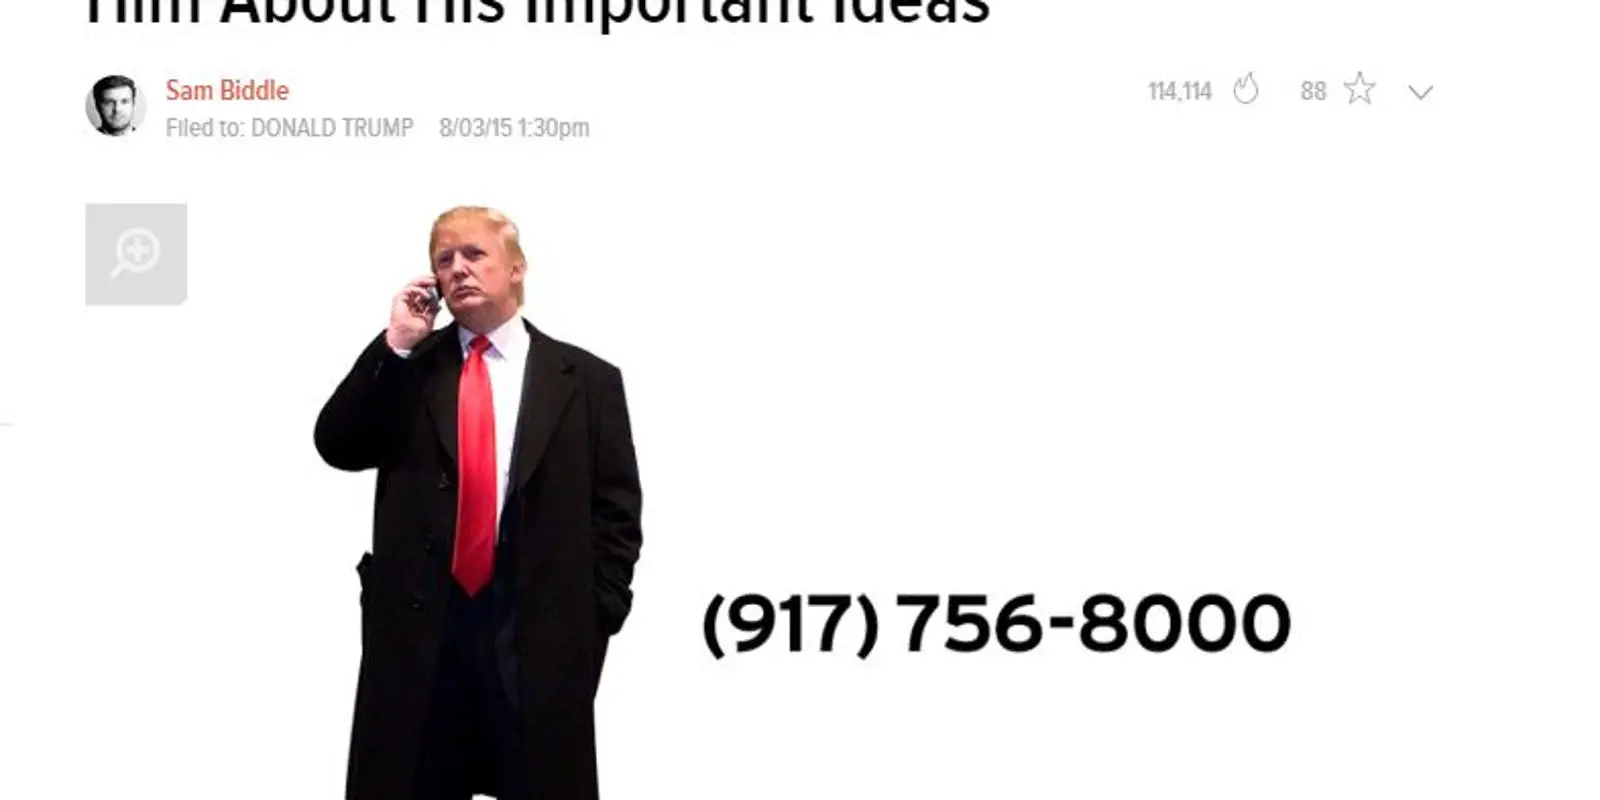 Site releases Donald Trump